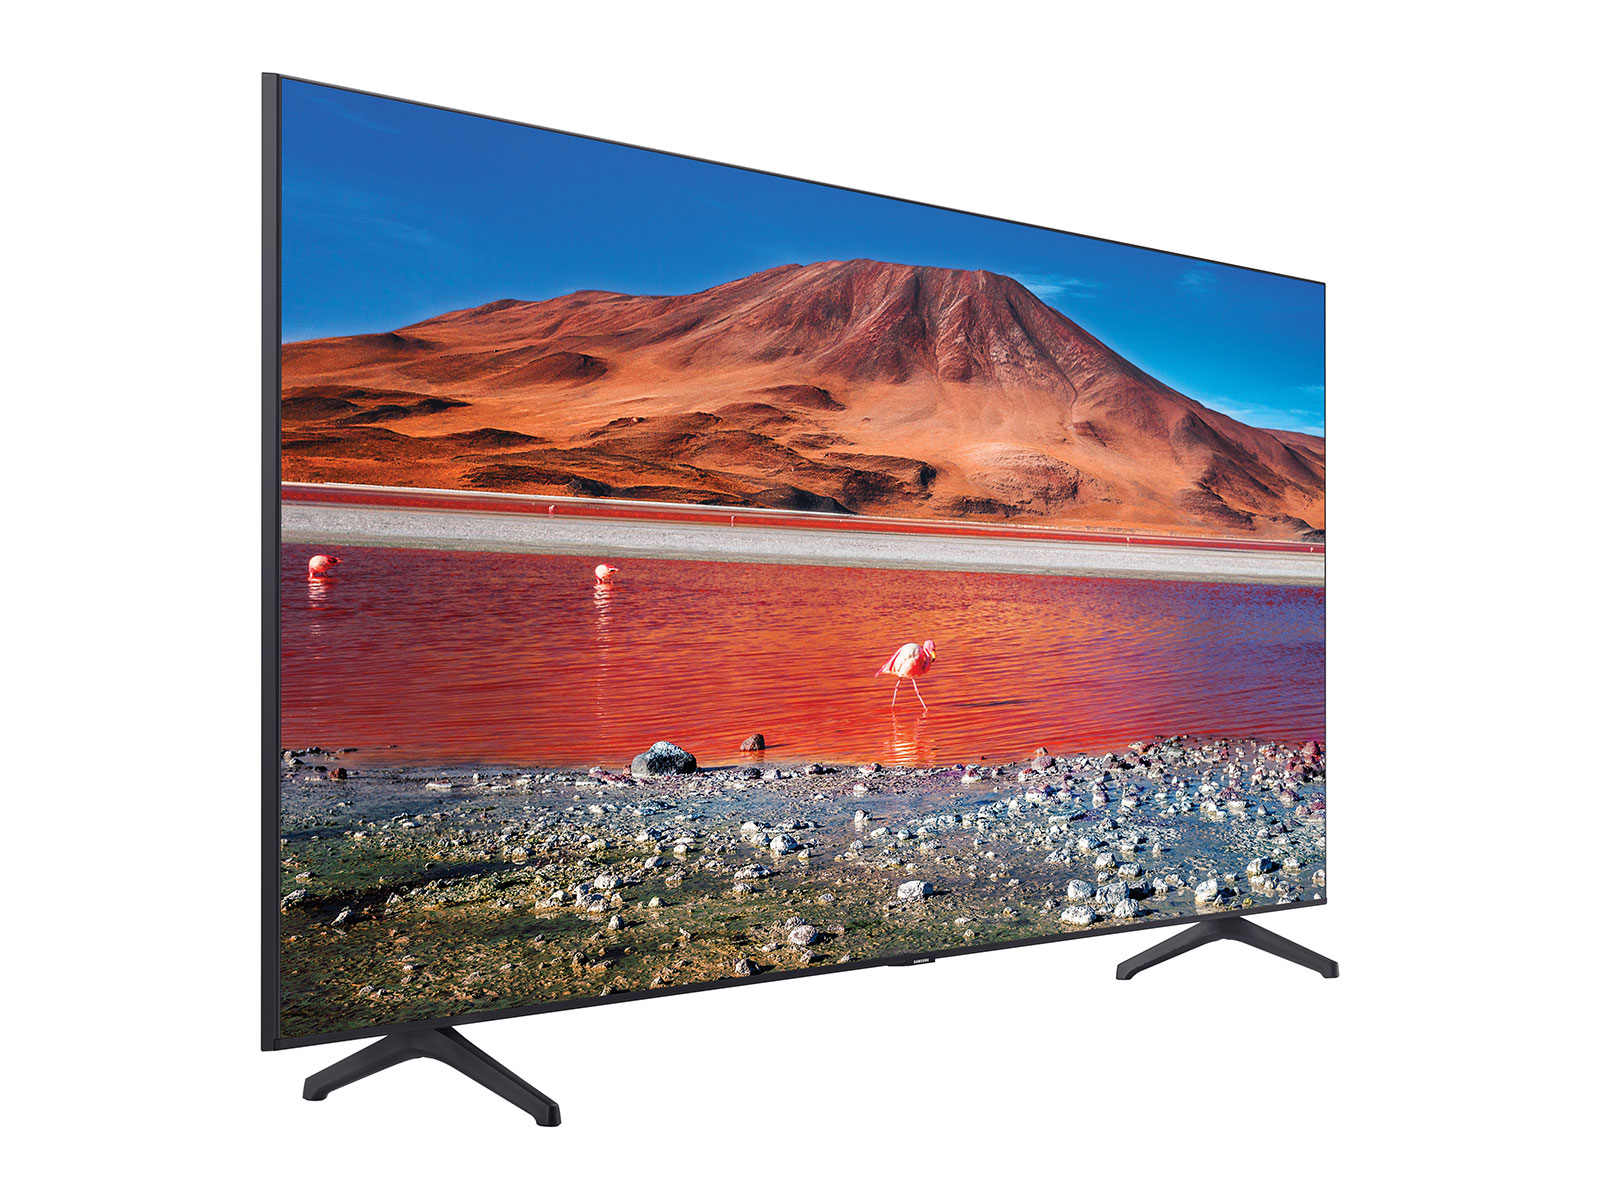 43" Class TU7000 4K UHD HDR Smart TV (2020) TVs - UN43TU7000FXZA | US